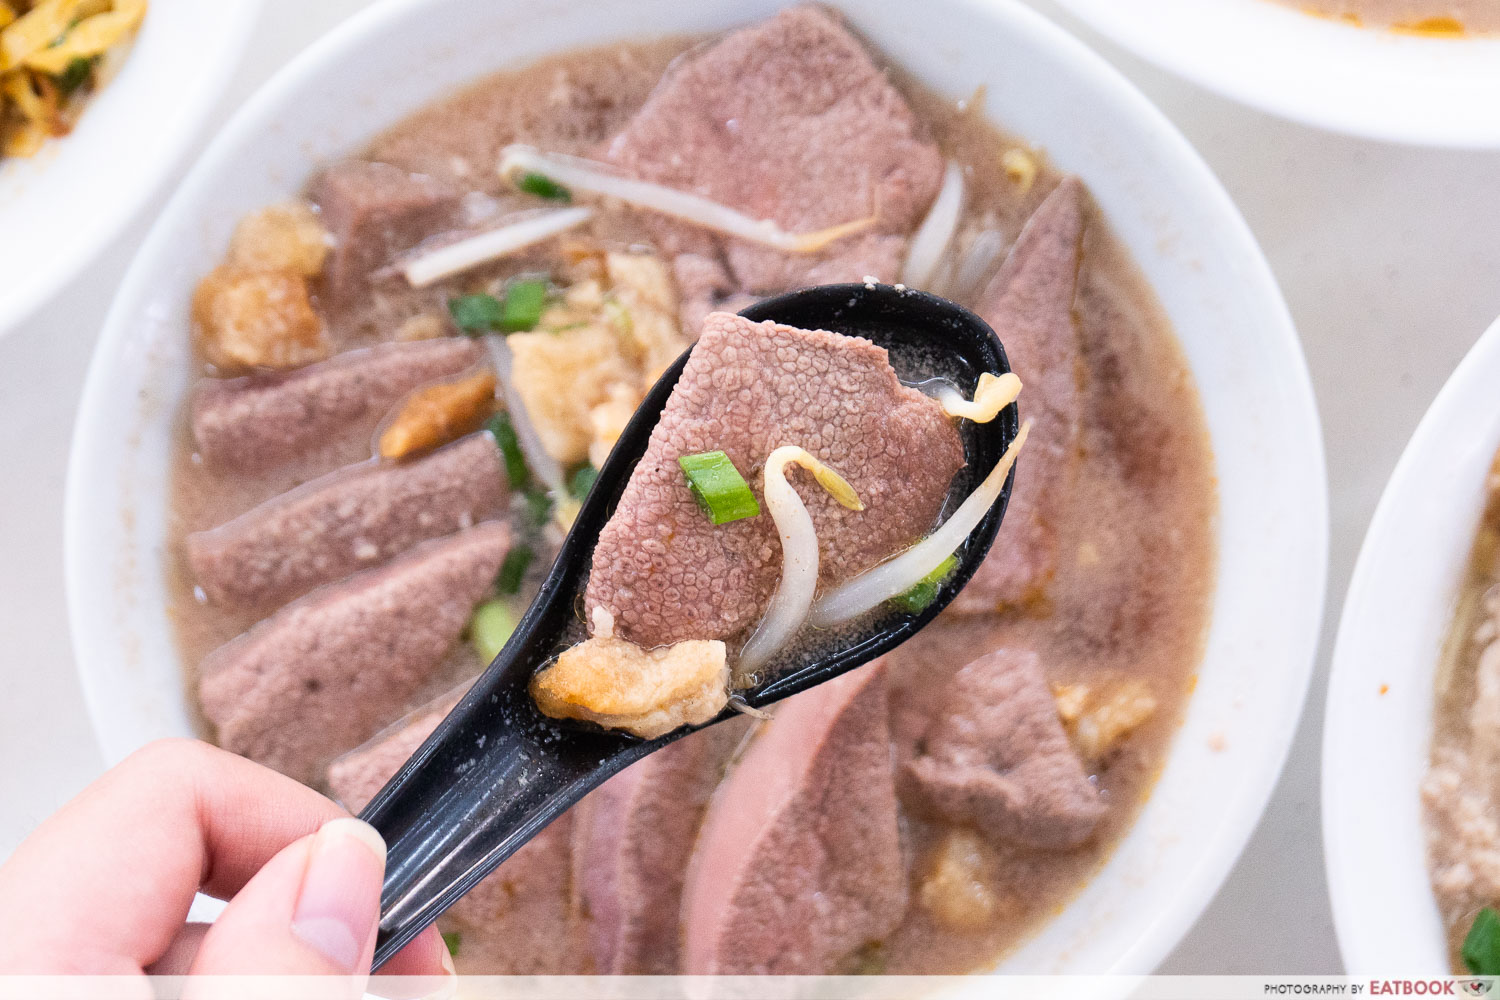 jin xi lai mui siong pork liver soup